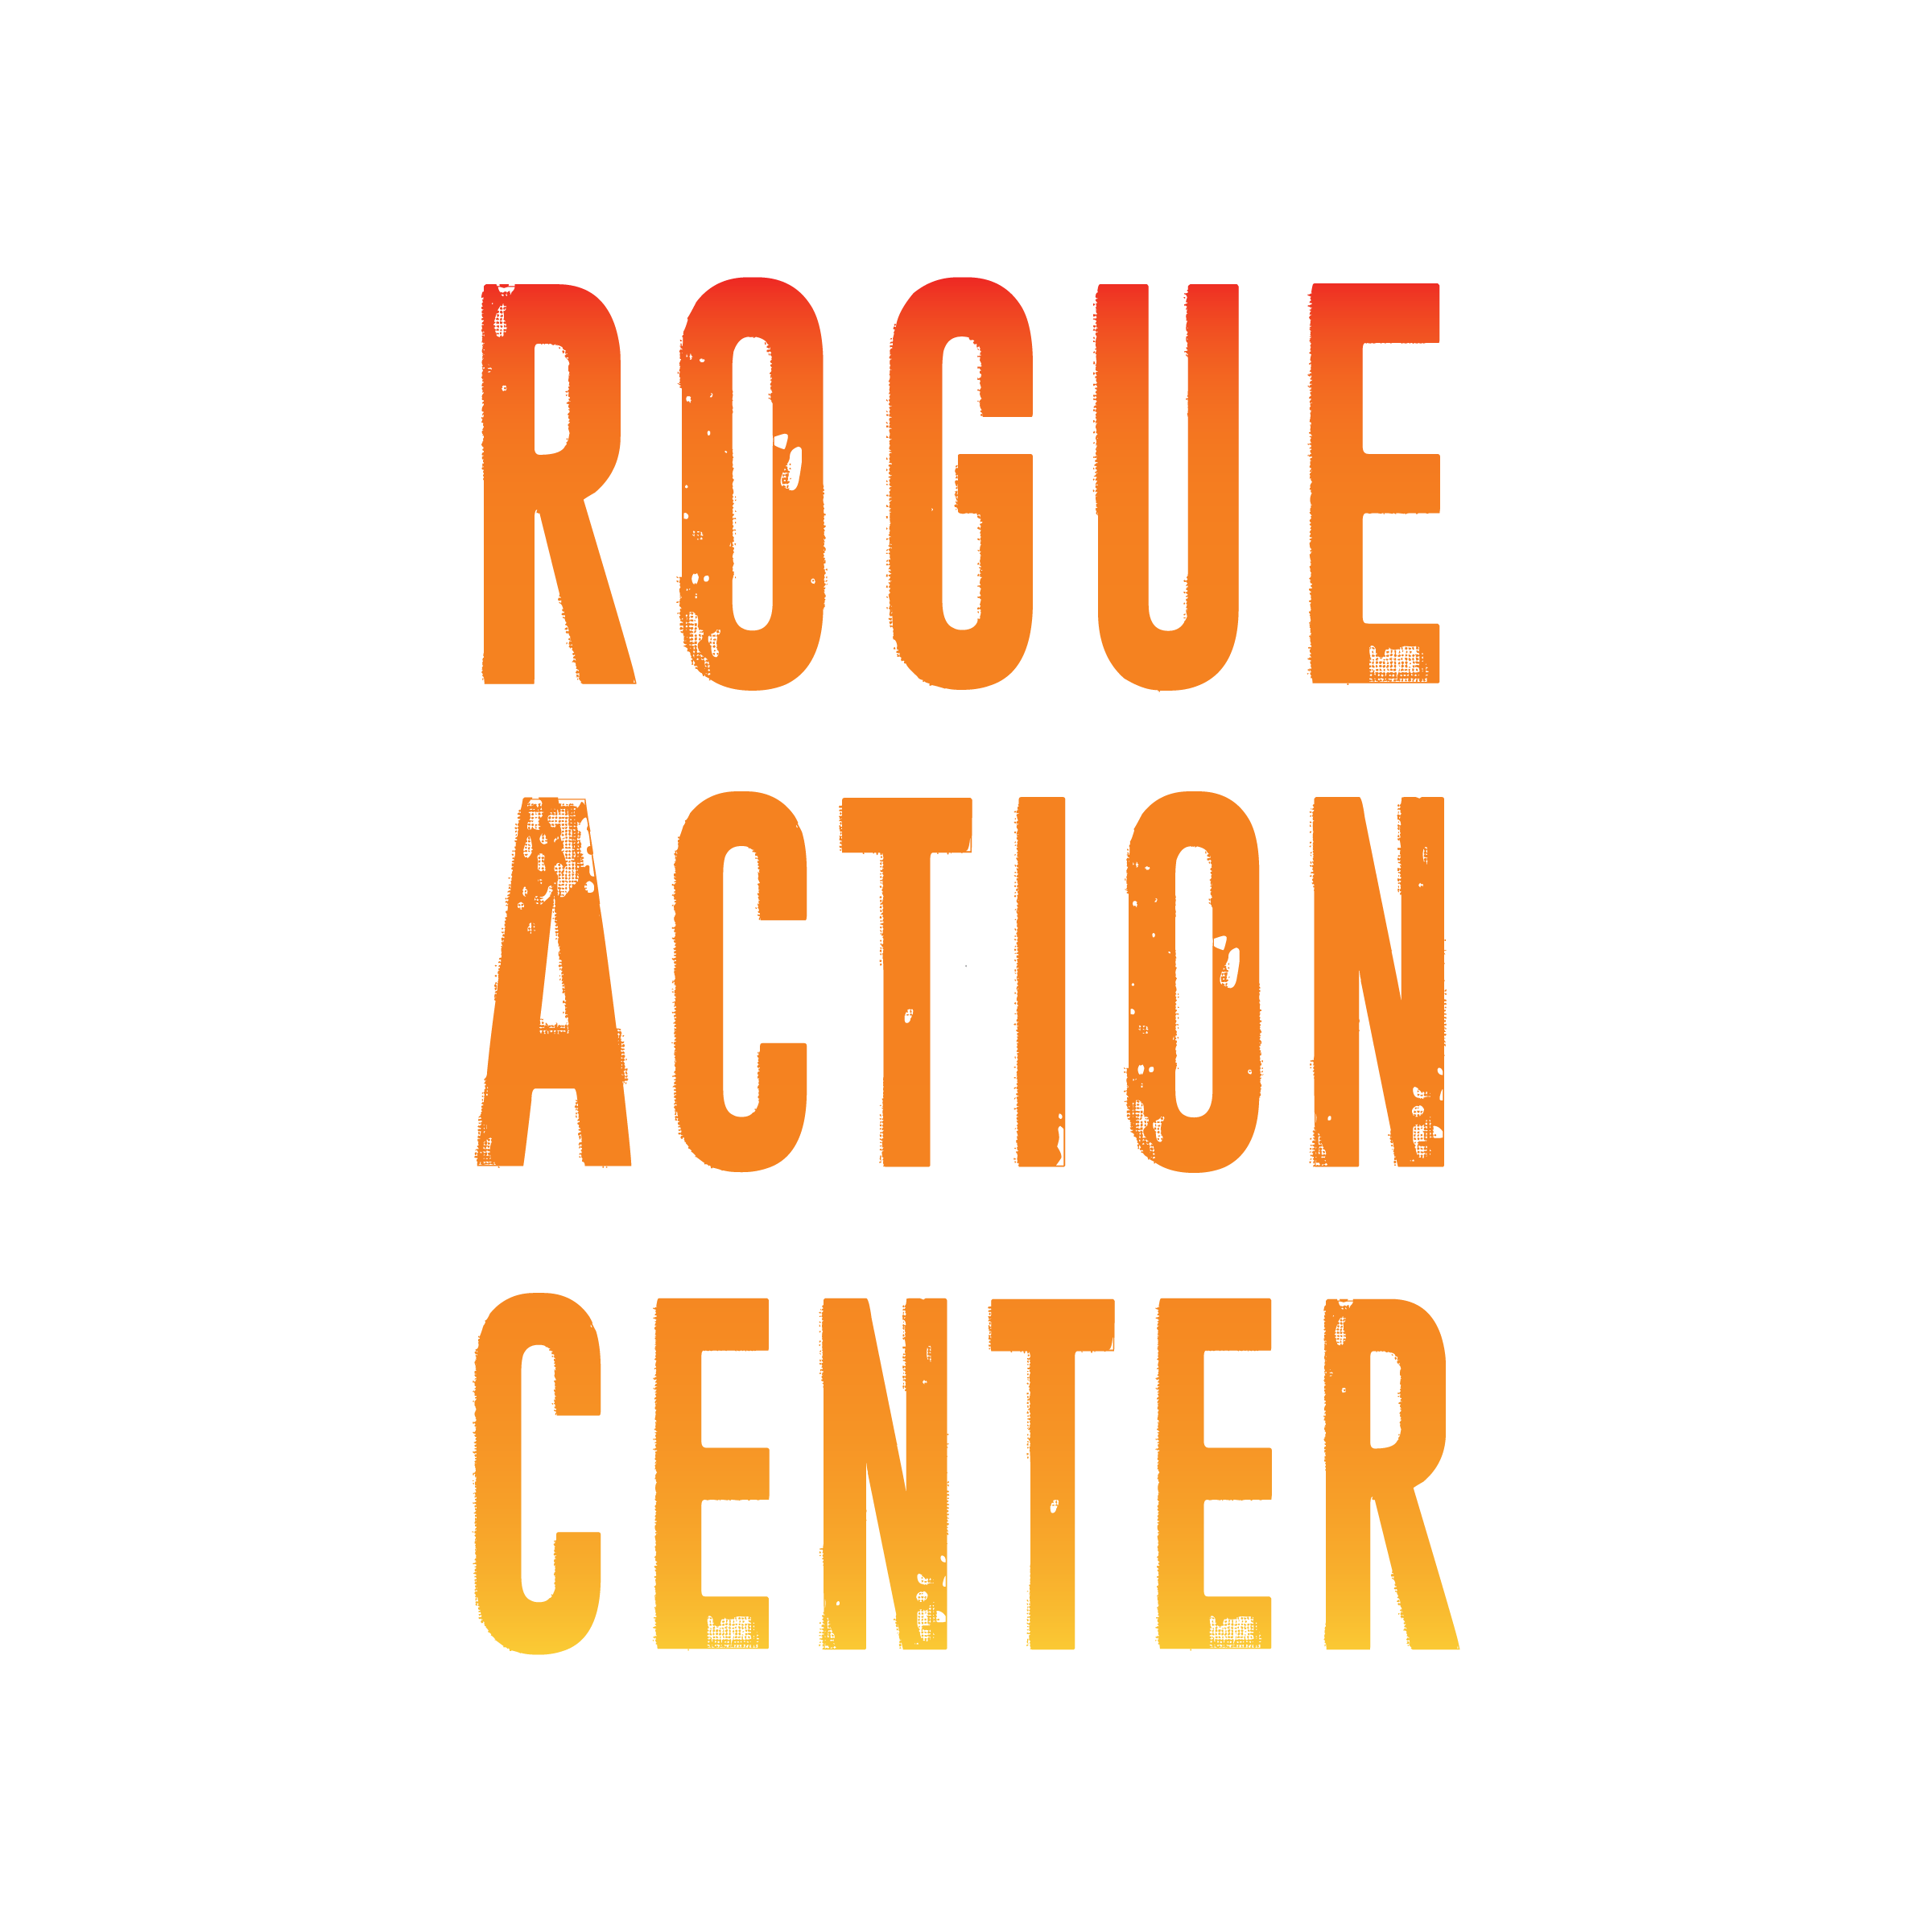 Rogue Action Center